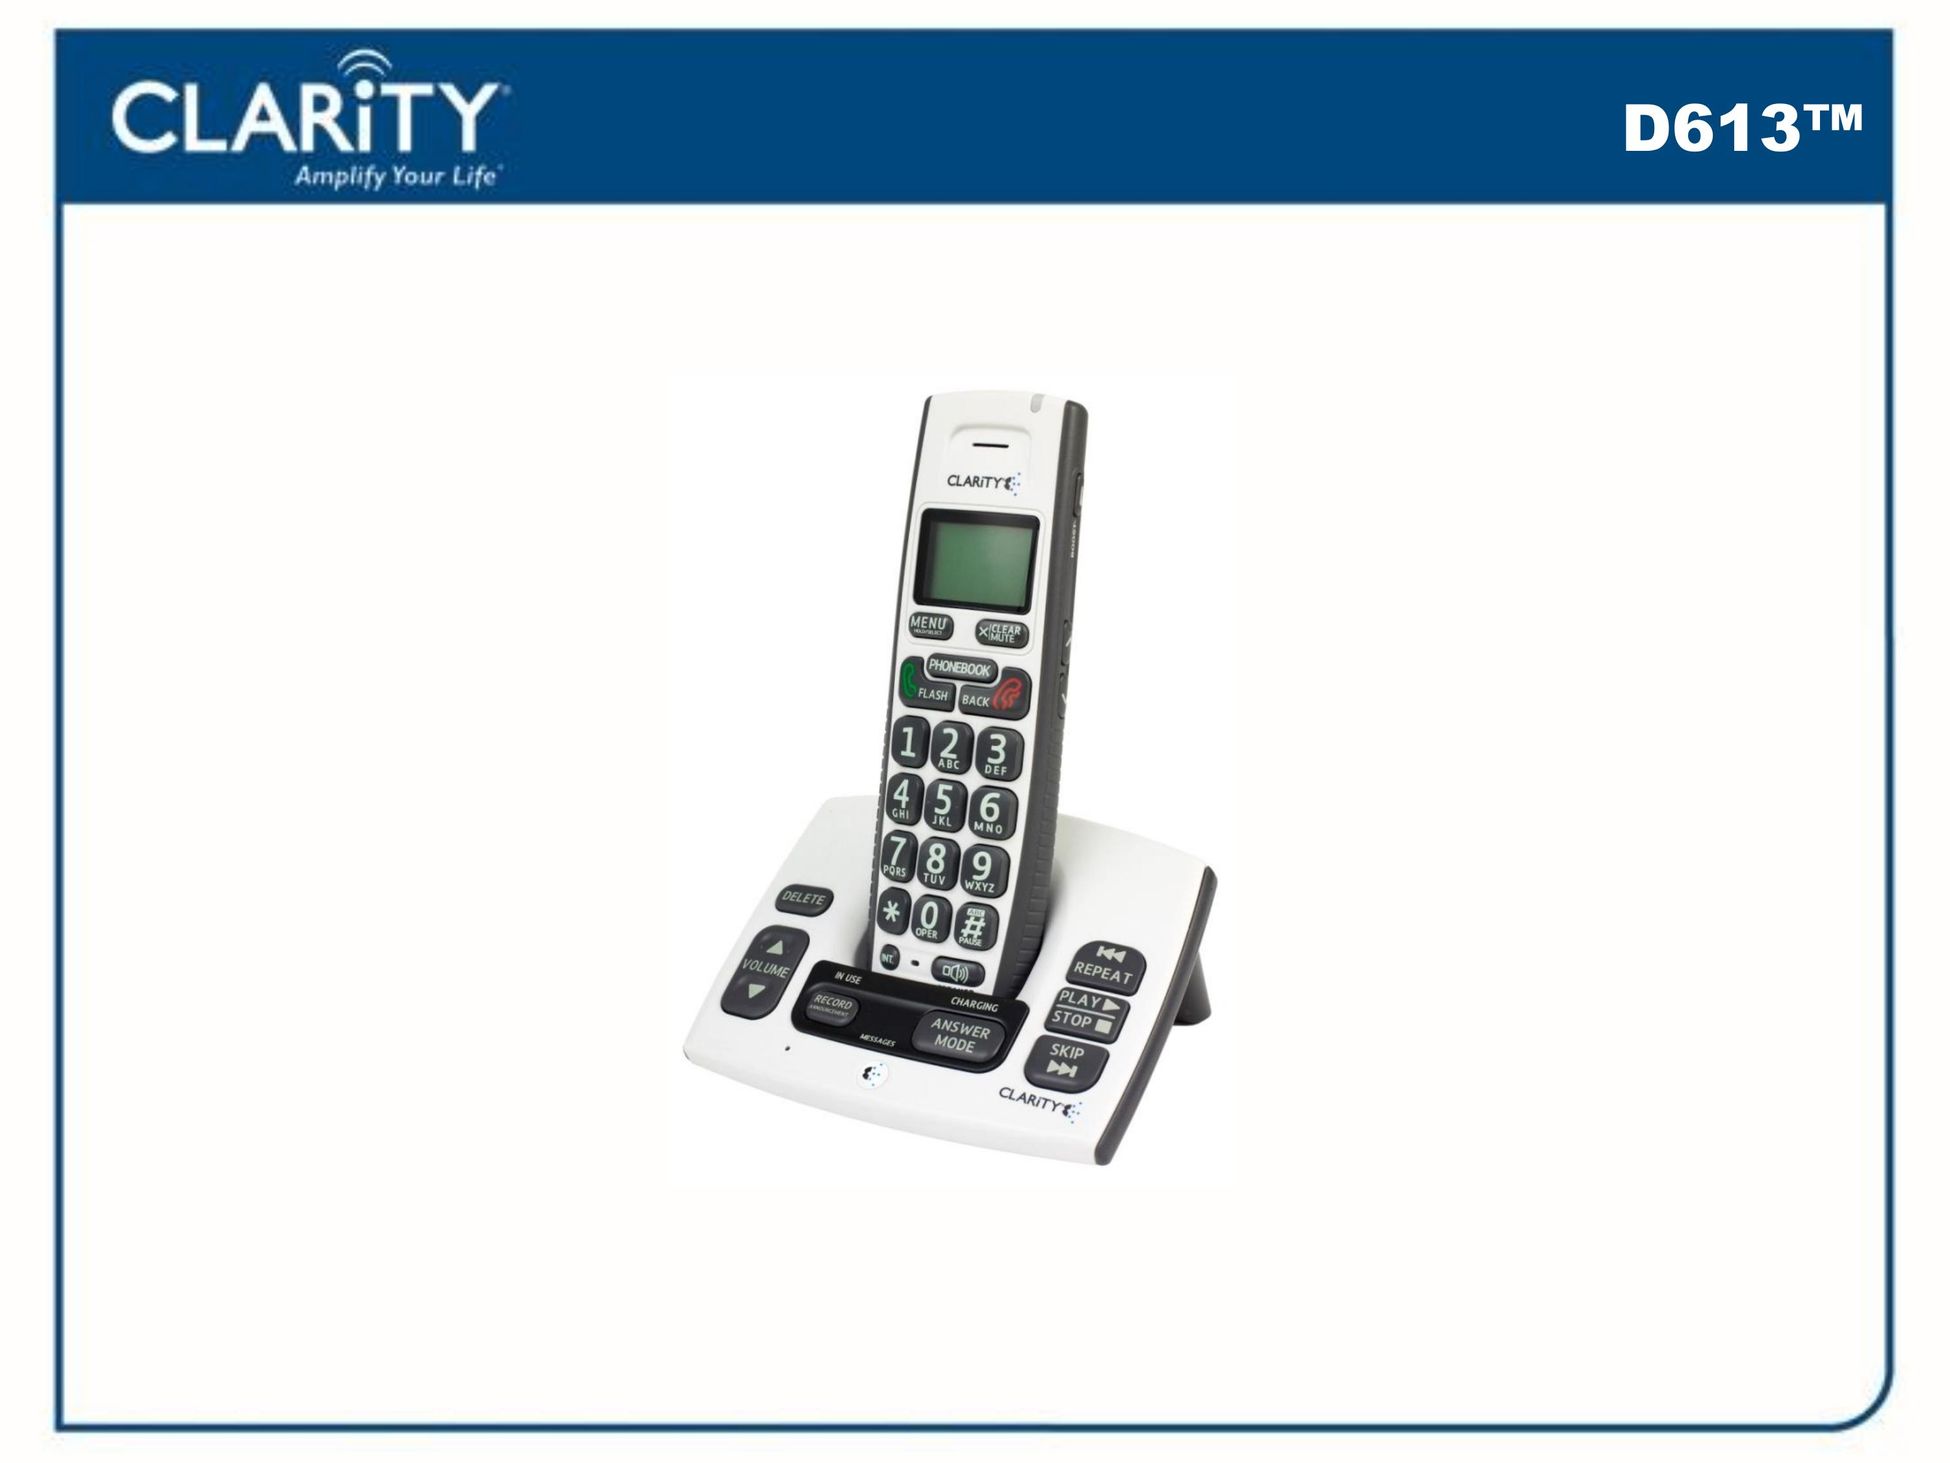 Clarity D613 Cordless Telephone User Manual